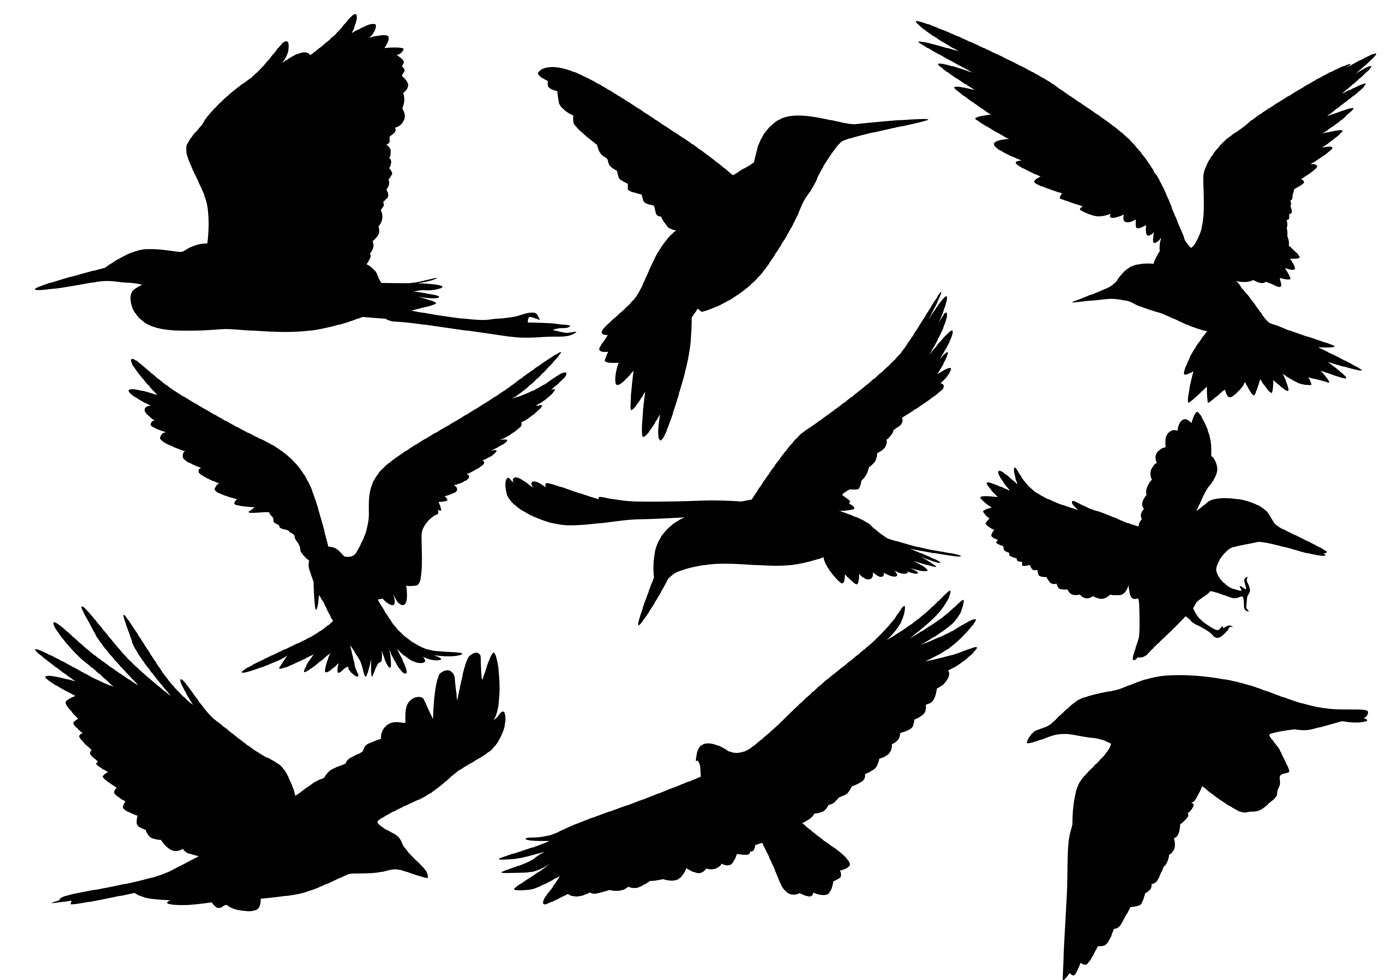 Bird Free Vector Art - (13926 Free Downloads)